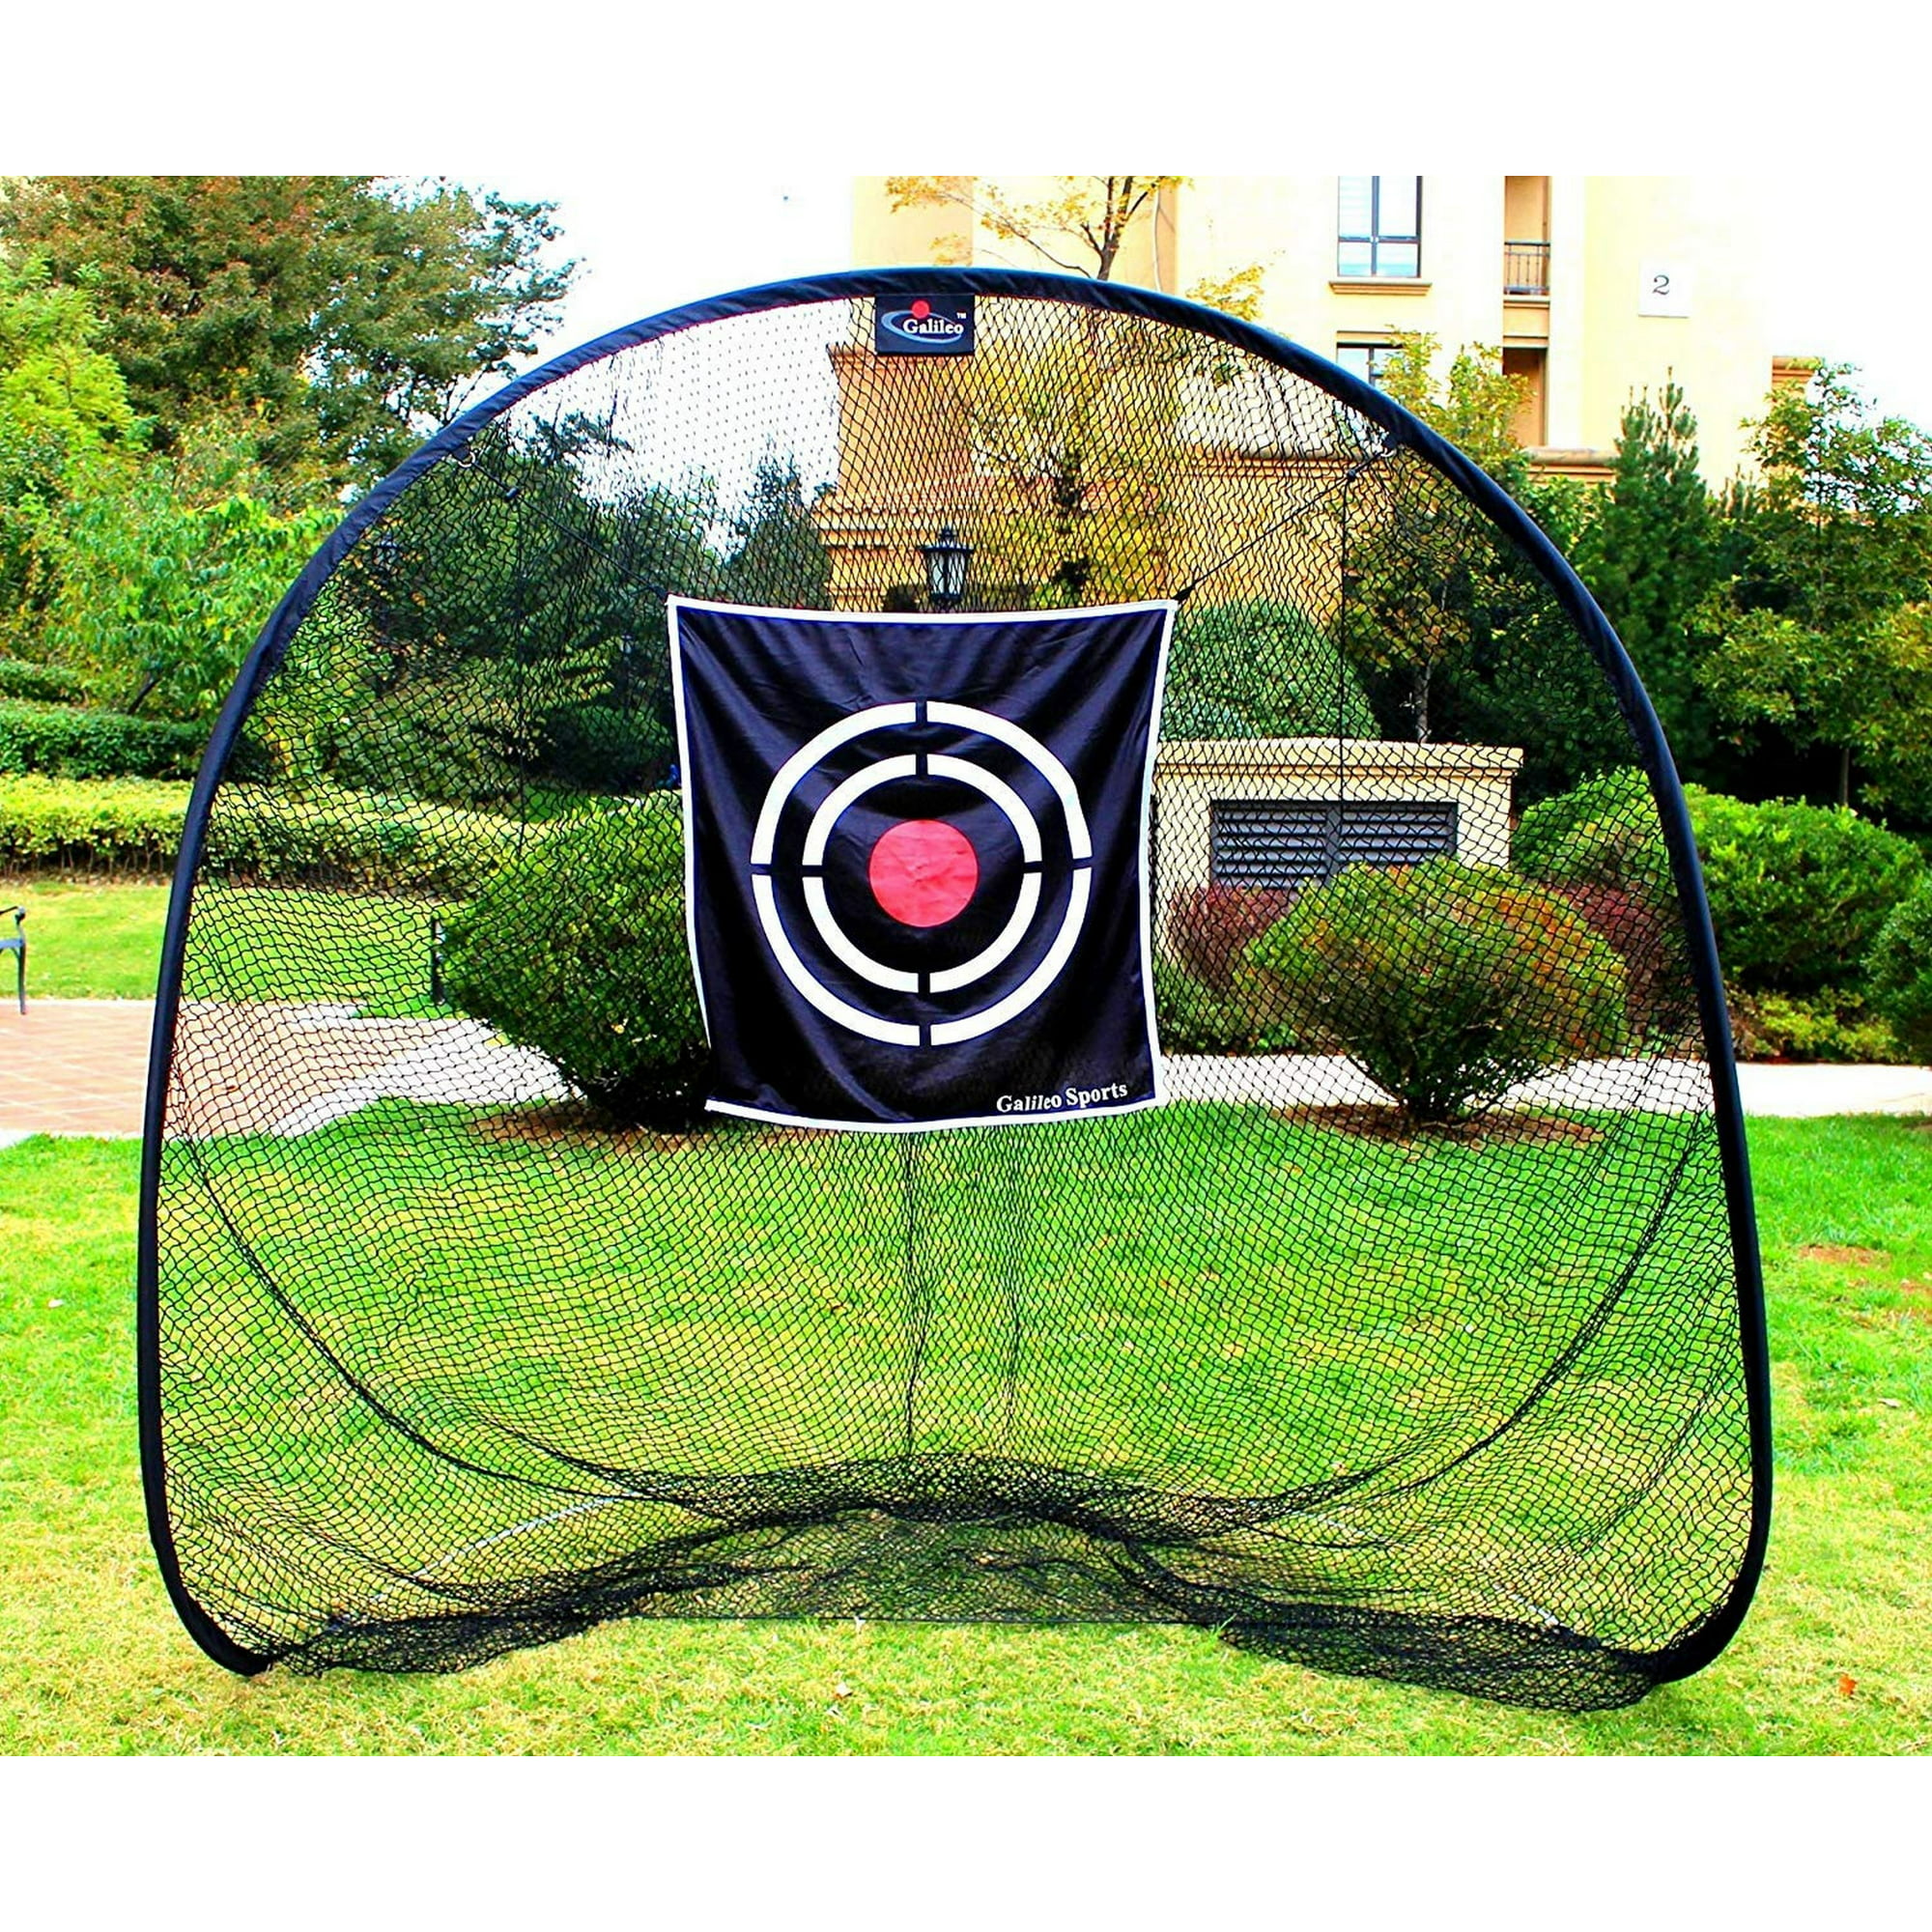 Galileo Golf Nets Practice Net For Backyard Portable With Target And Carry Bag Walmart Com Walmart Com